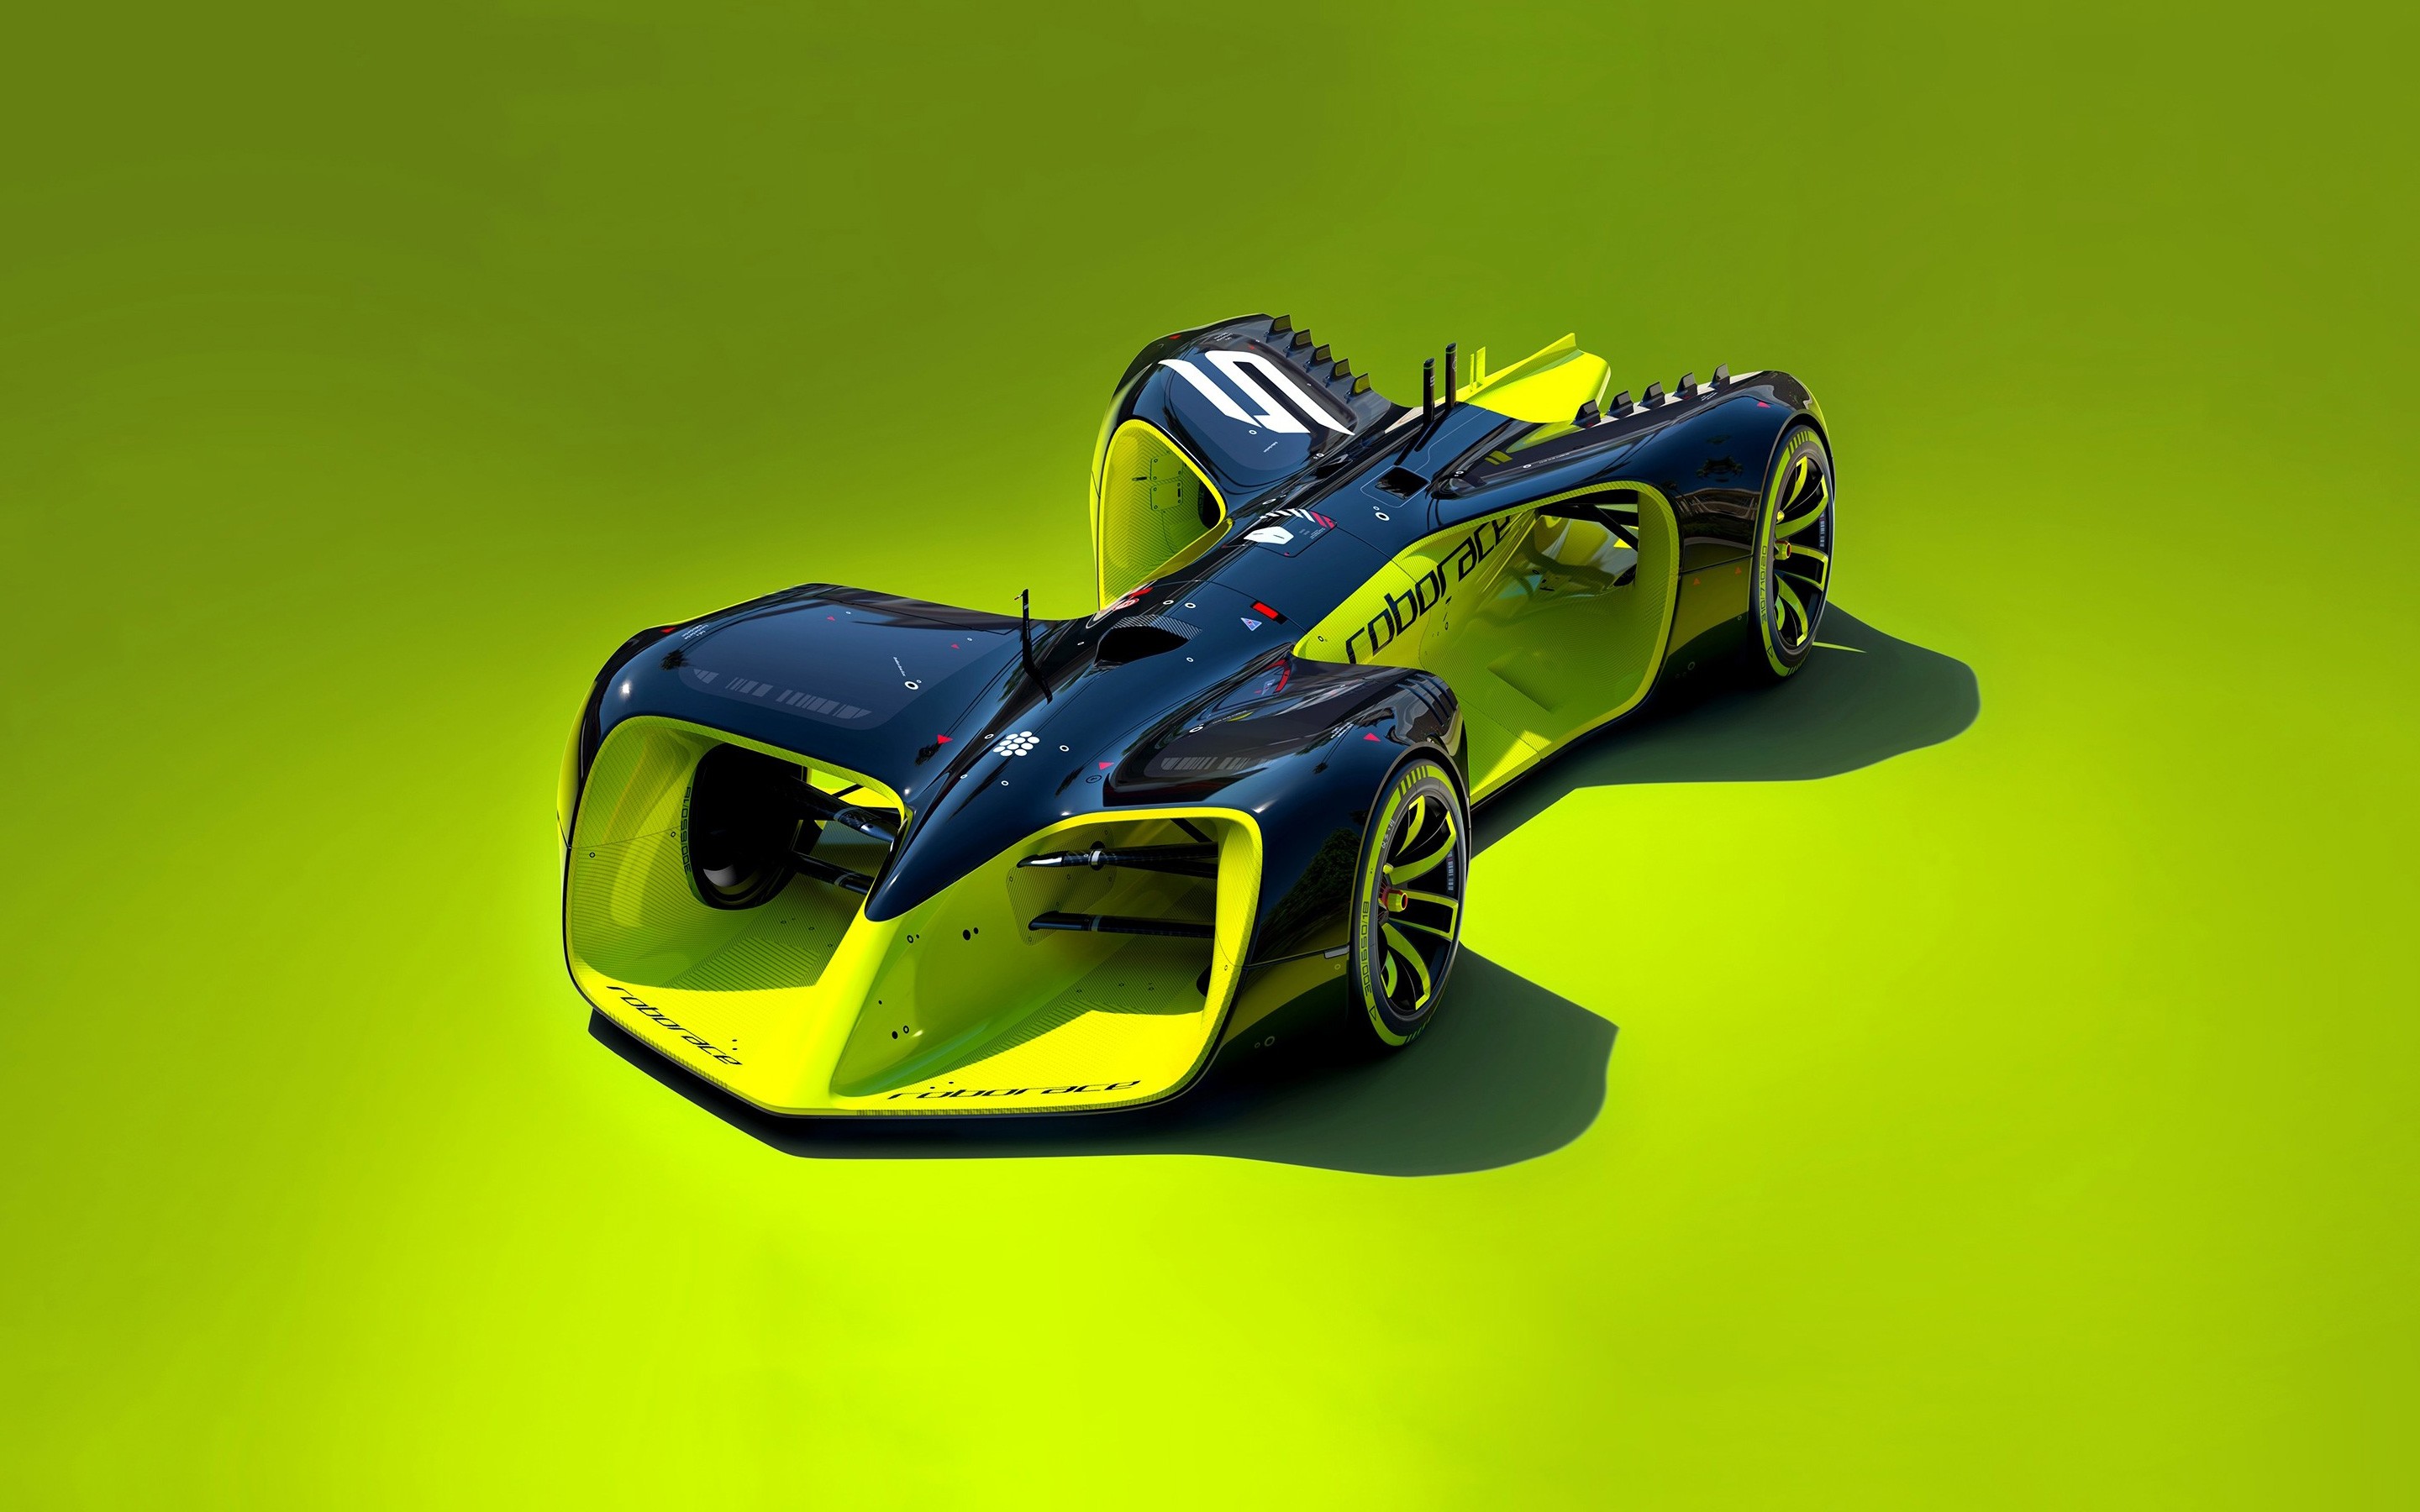 electric wallpaper hd,automotive design,yellow,vehicle,car,race car